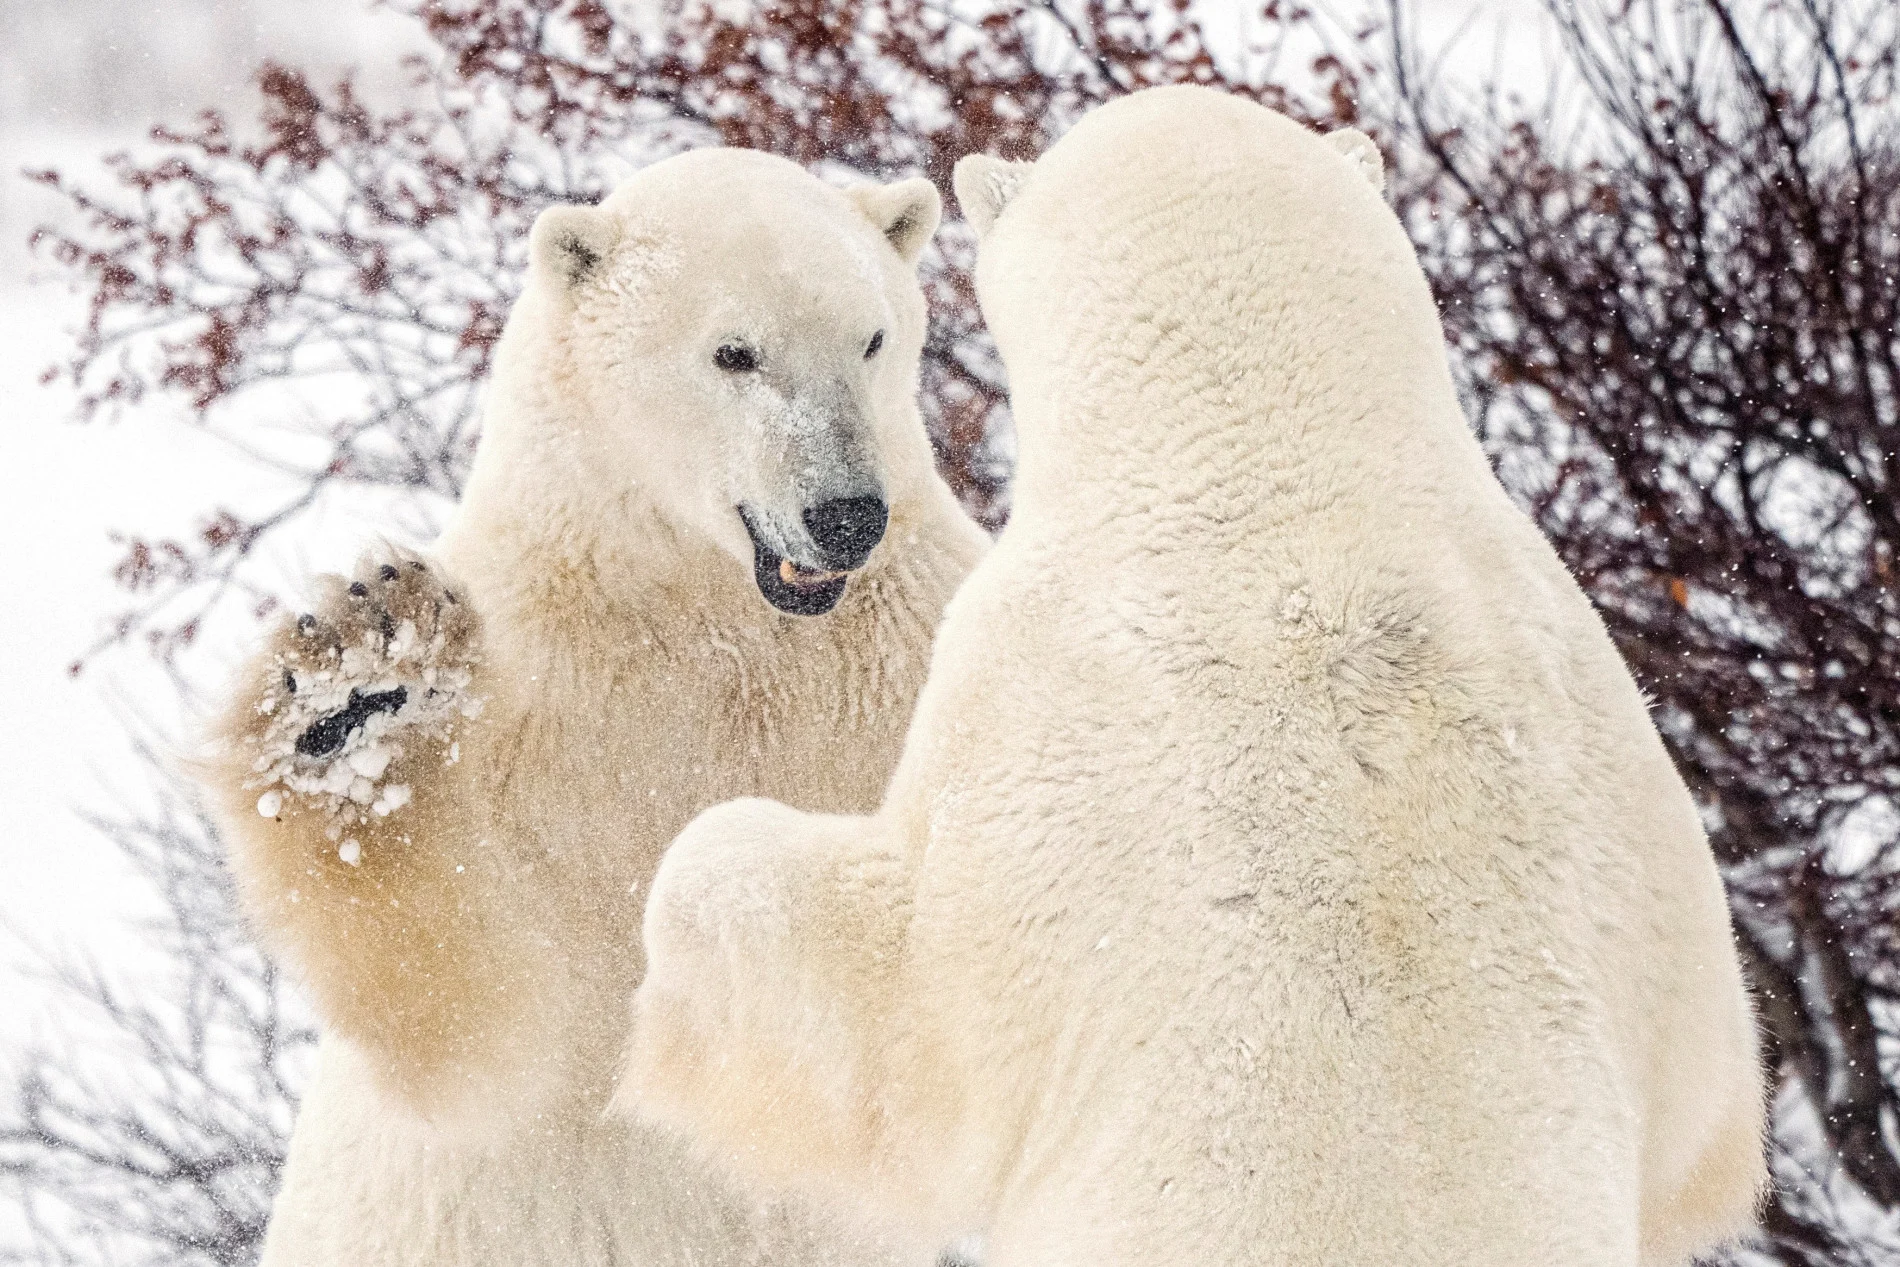 Polar bears spar near the Hudson Bay community of Churchill, Manitoba, Canada November 20, 2021. Picture taken November 20, 2021. REUTERS/Carlos Osorio